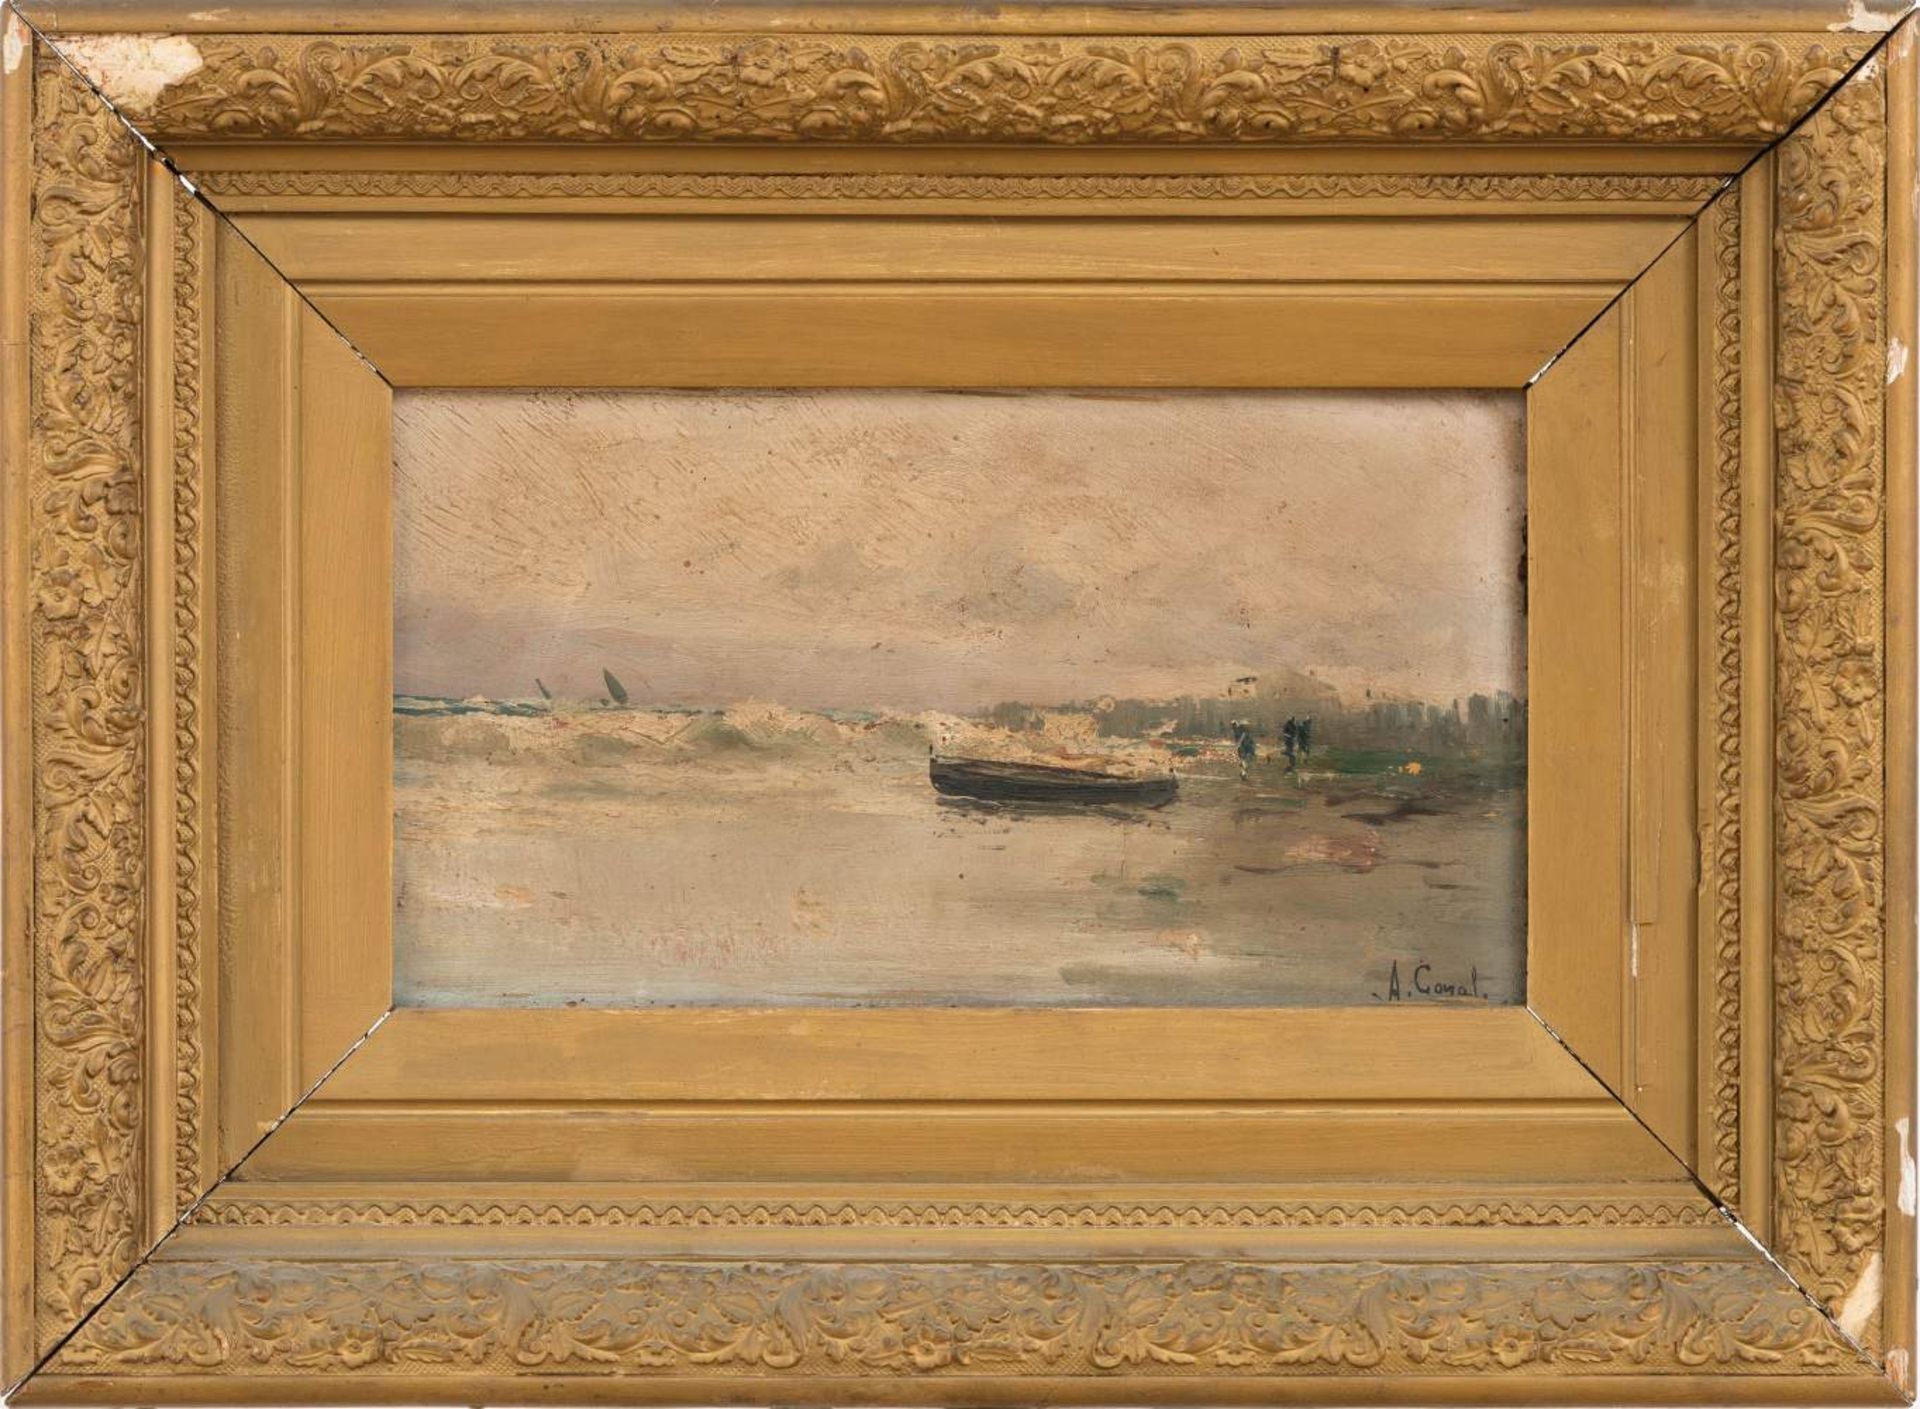 ESCUELA FRANCESA, Siglo XIX Marina con barcas Varadas Óleo/Tabla. firmado: A. Goval. Presenta